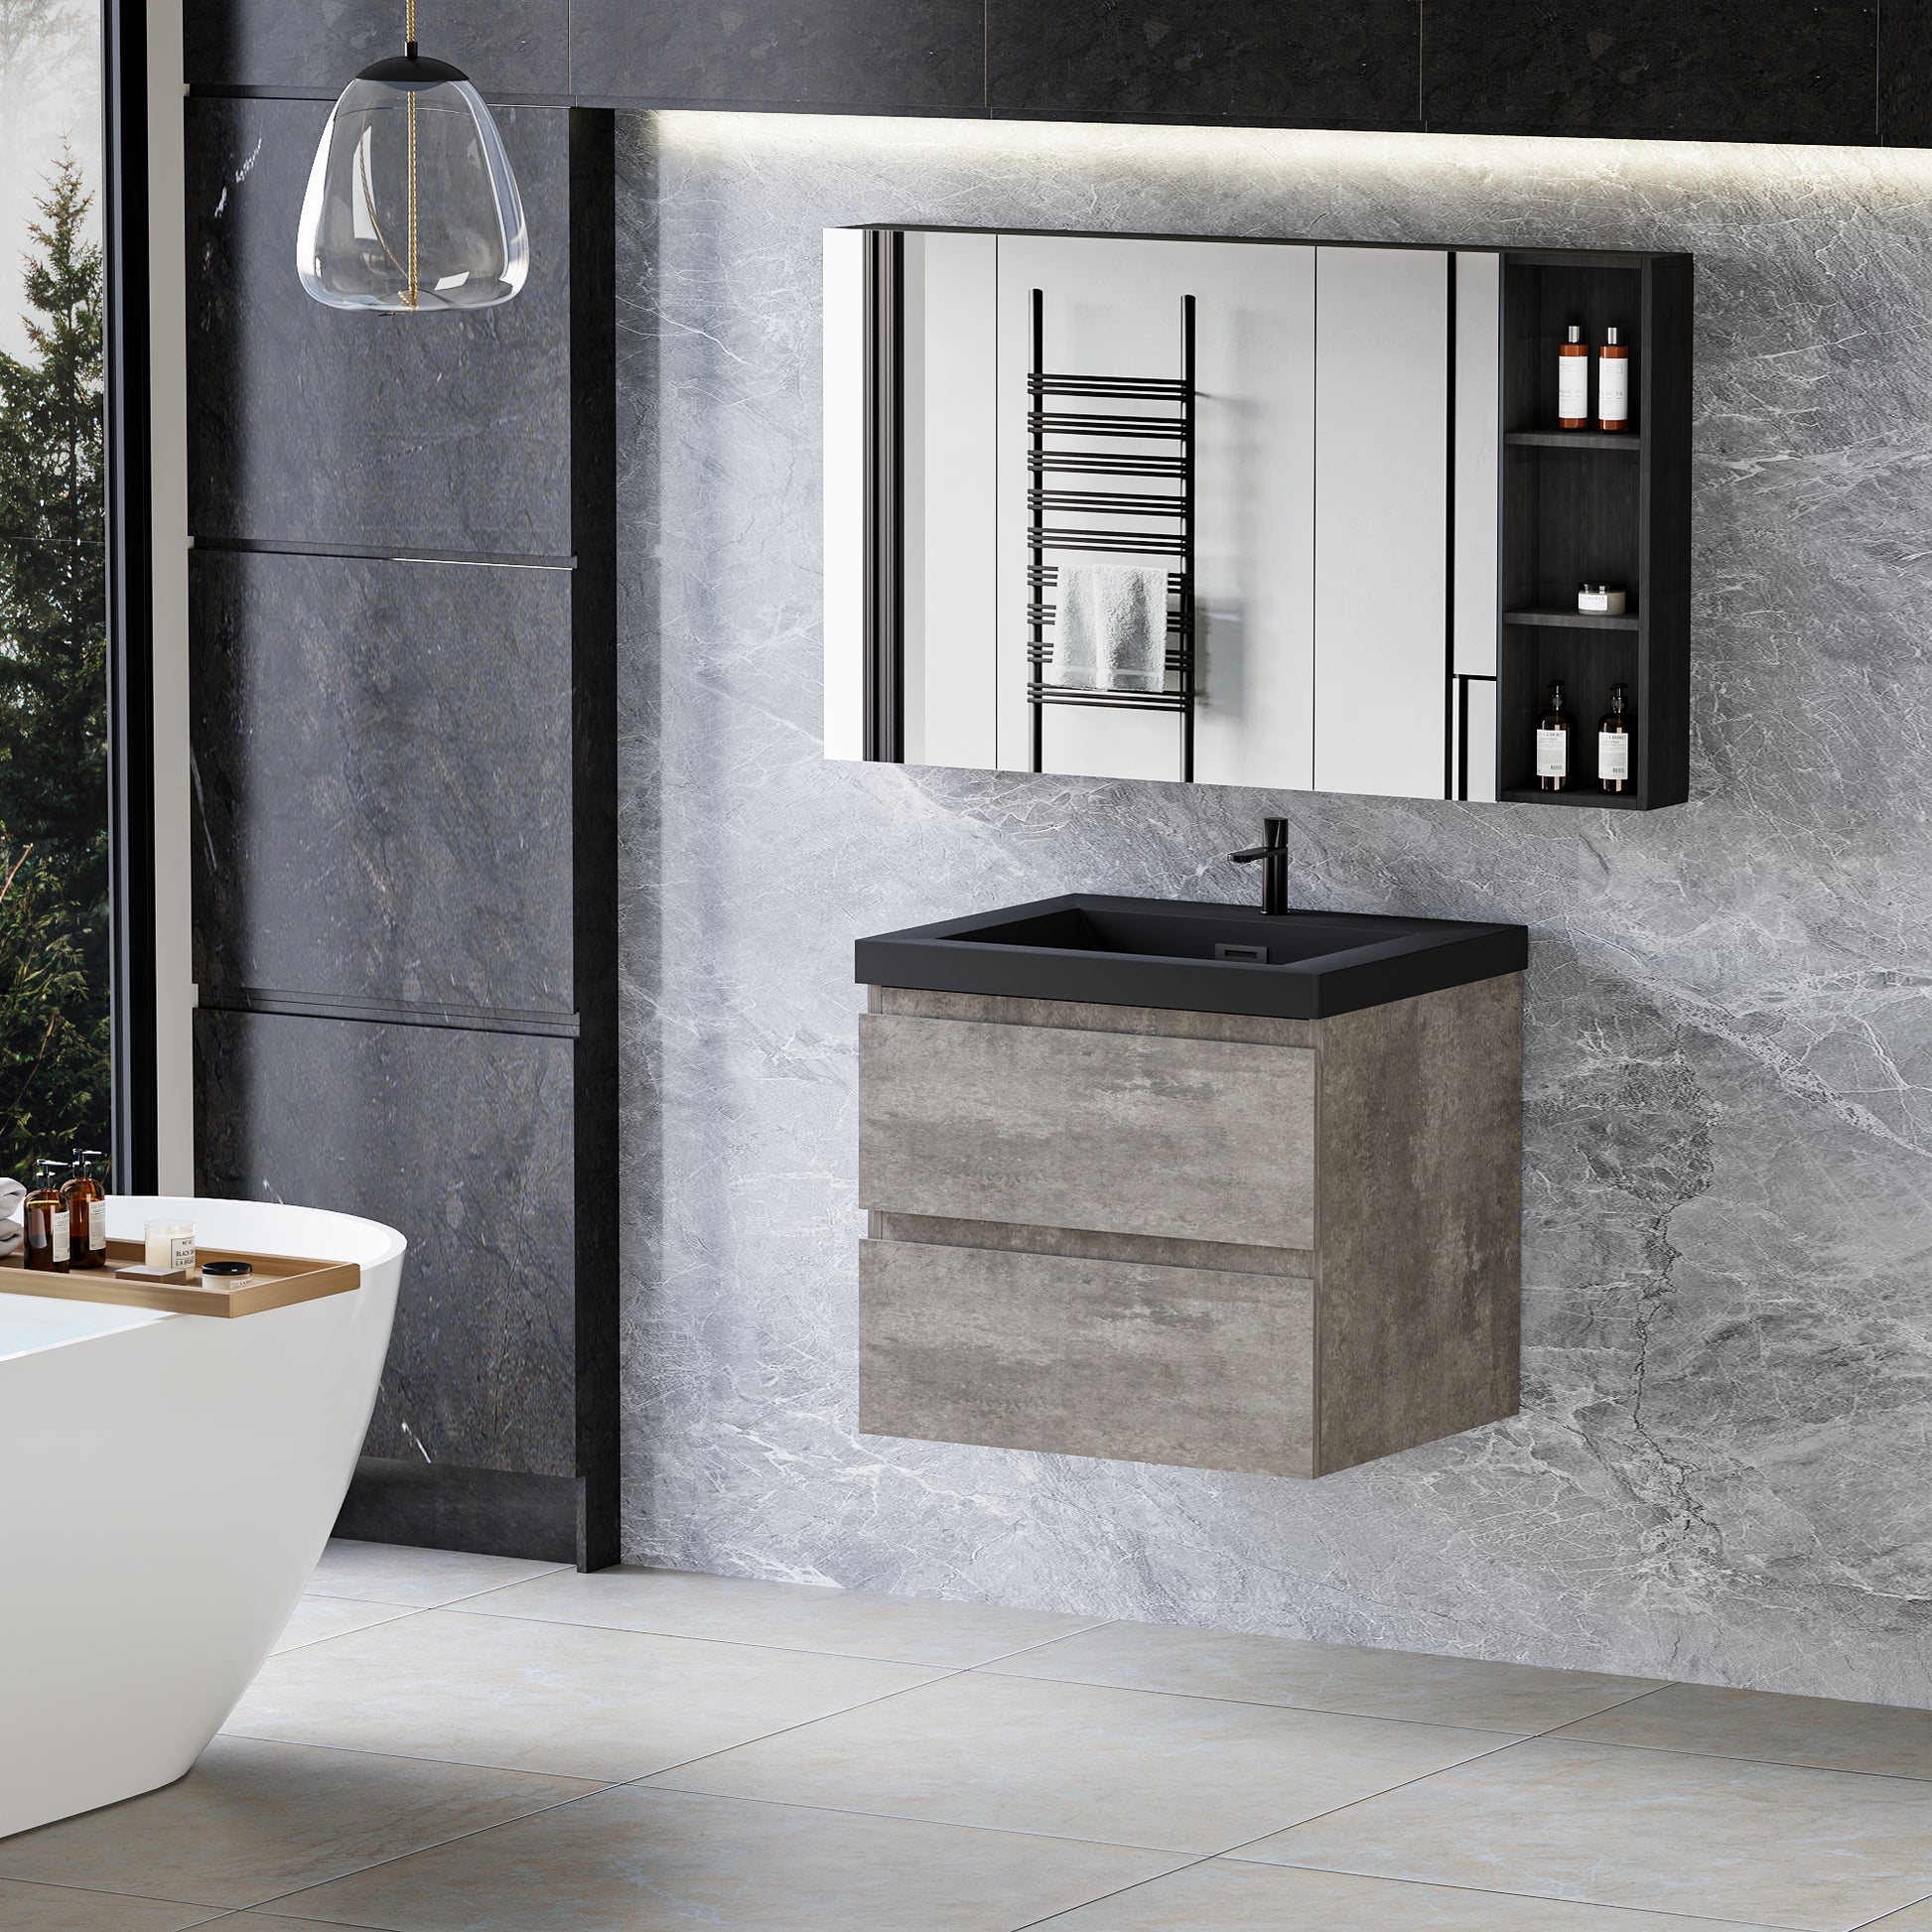 24" Floating Bathroom Vanity with Sink, Modern Wall grey-bathroom-wall mounted-melamine